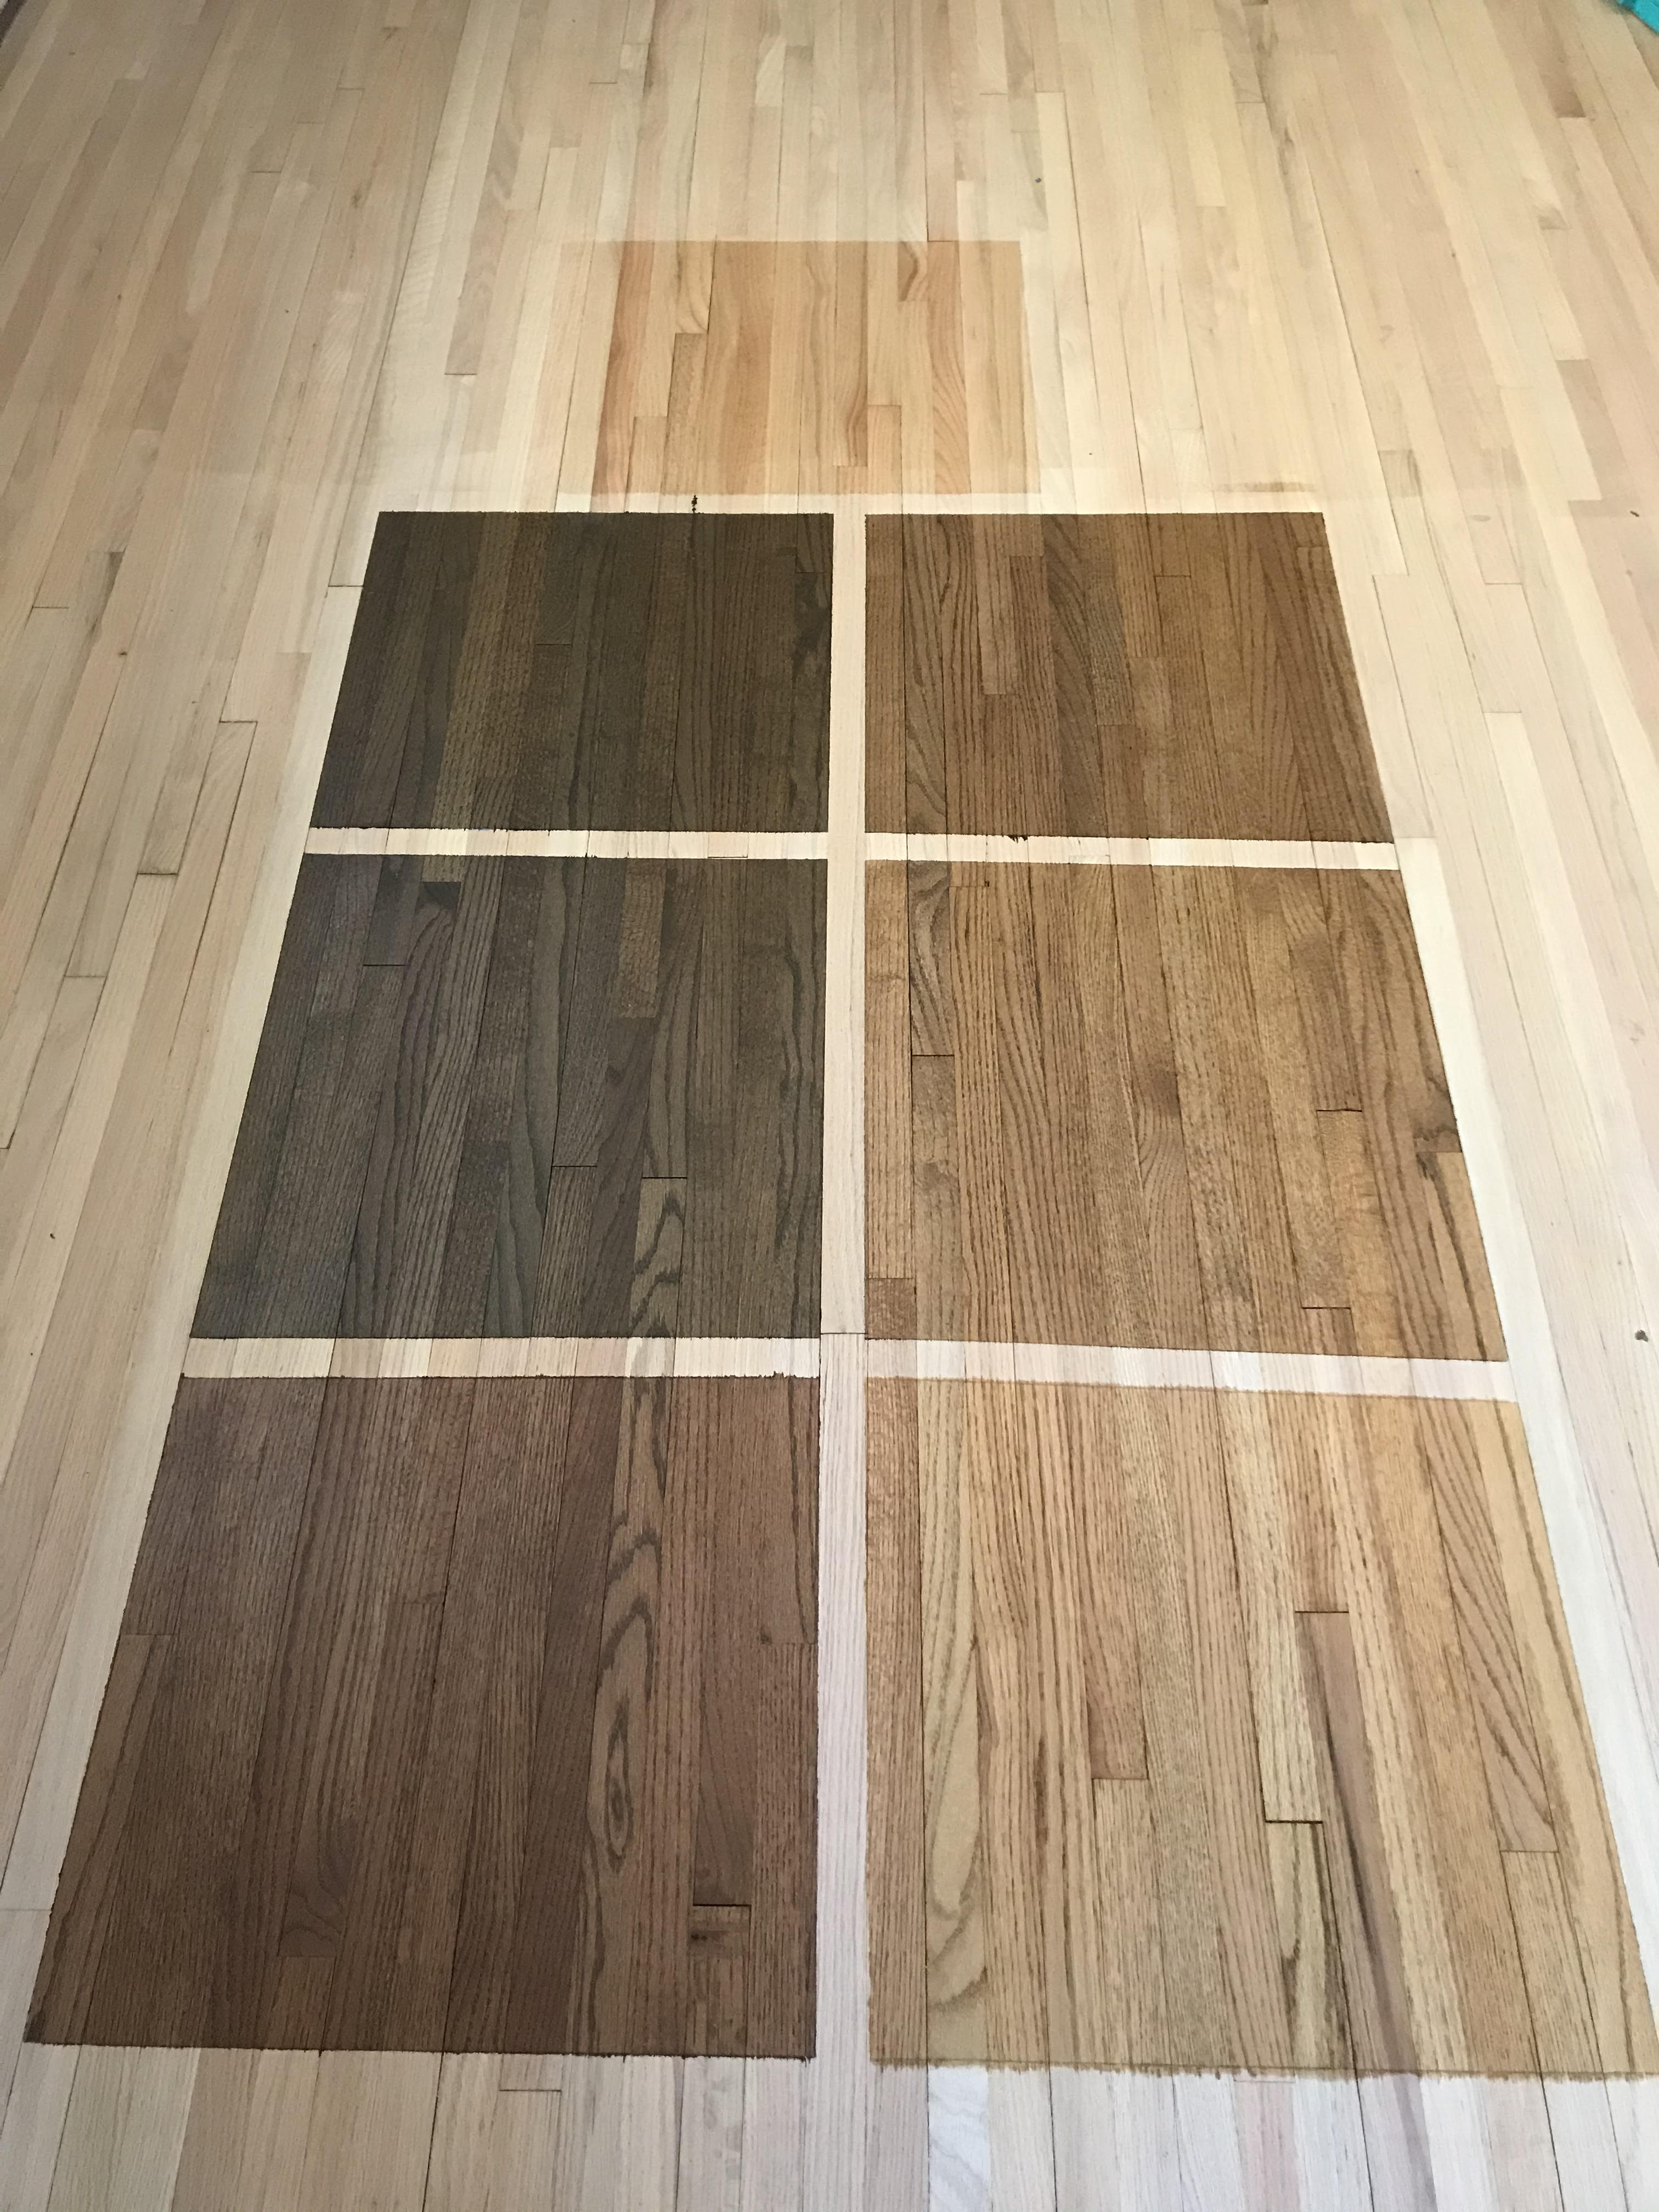 Hardwood Floor Refinishing Ub, Can You Sand And Stain Hardwood Floors